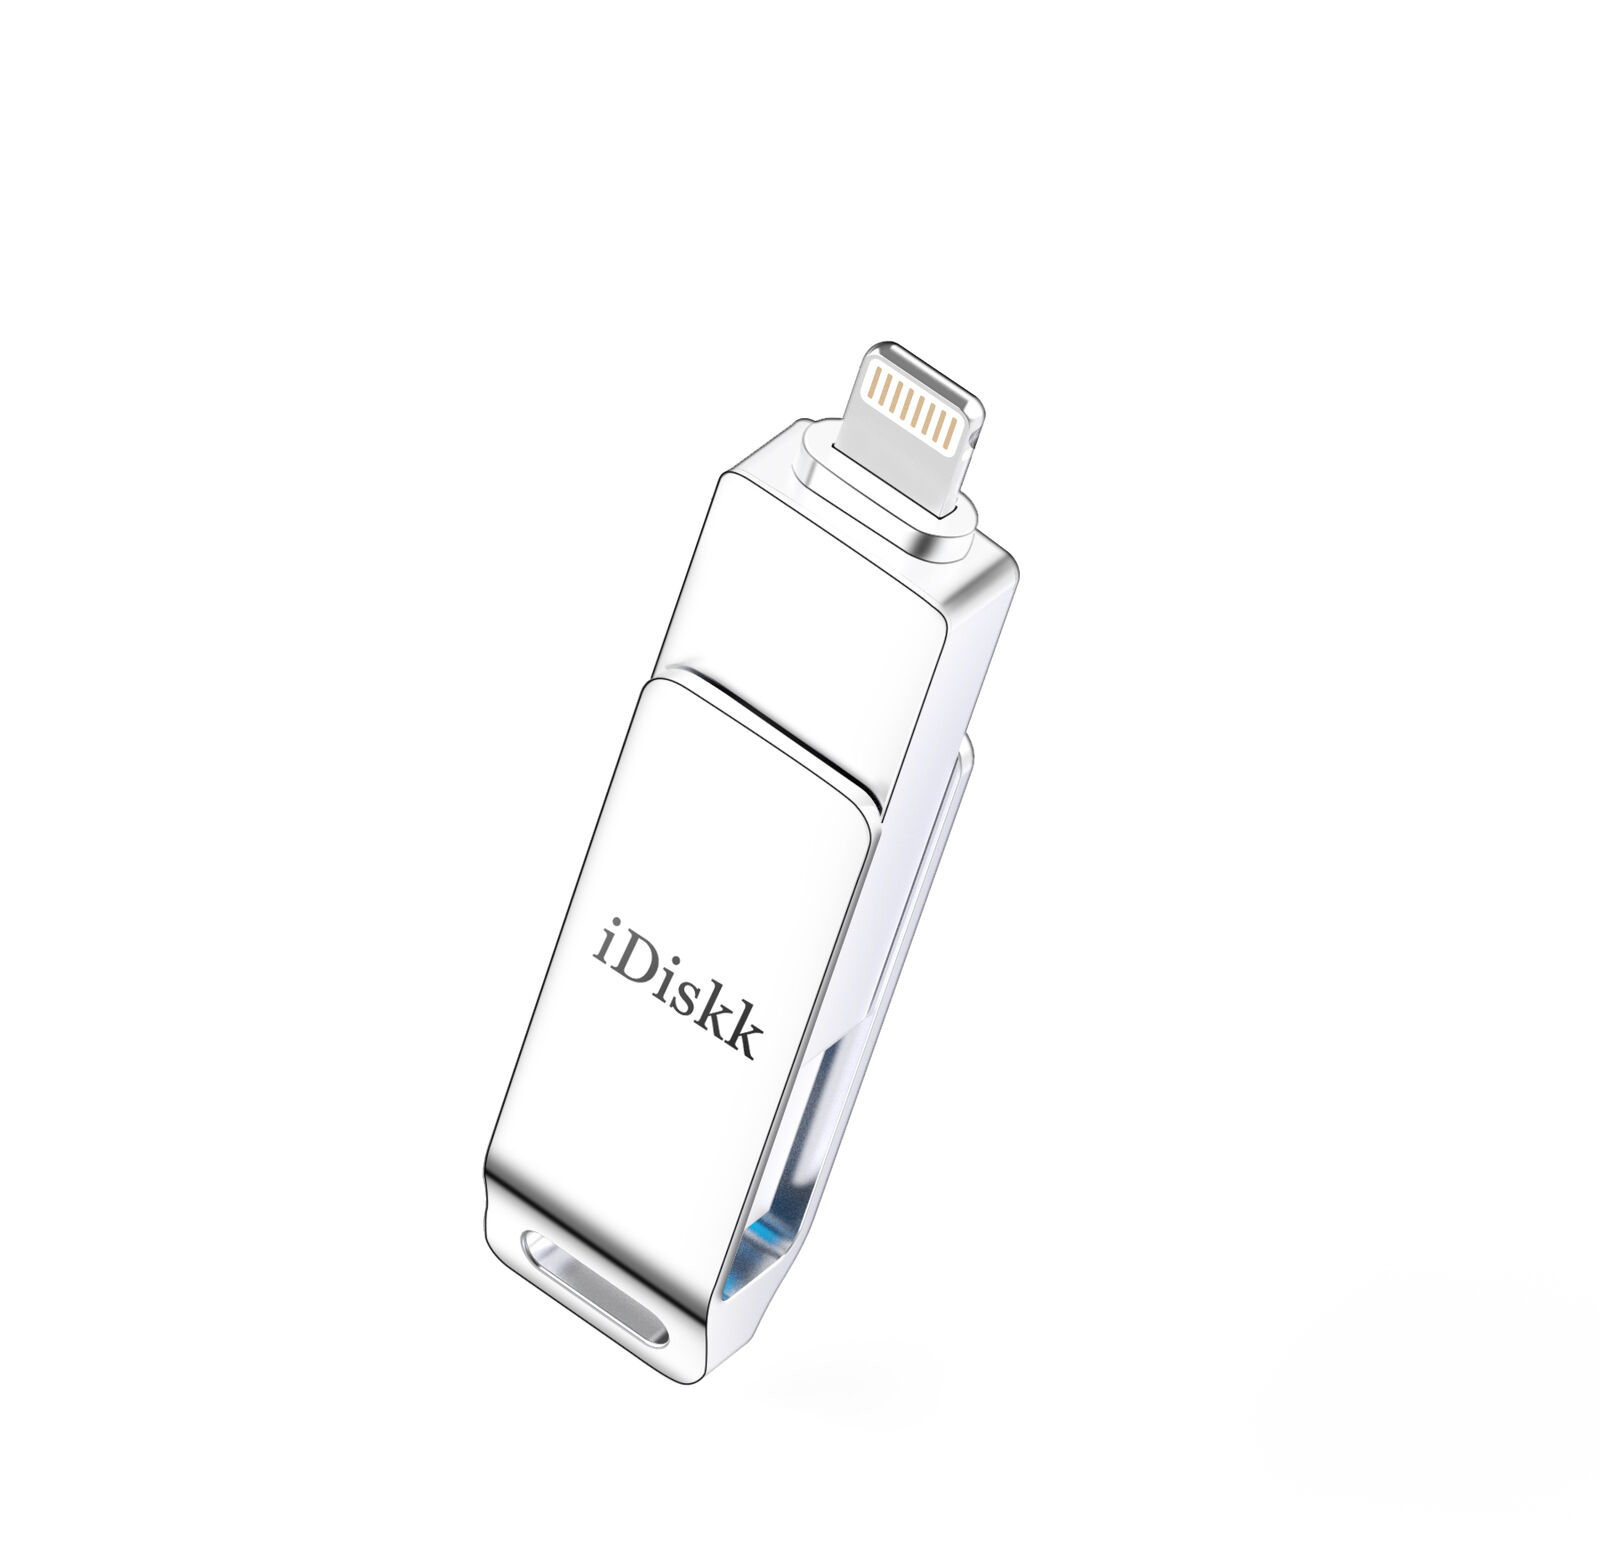 iDiskk USB Flash Drive Photo Stick Memory Stick Mobile for iPhone/Laptops/PC